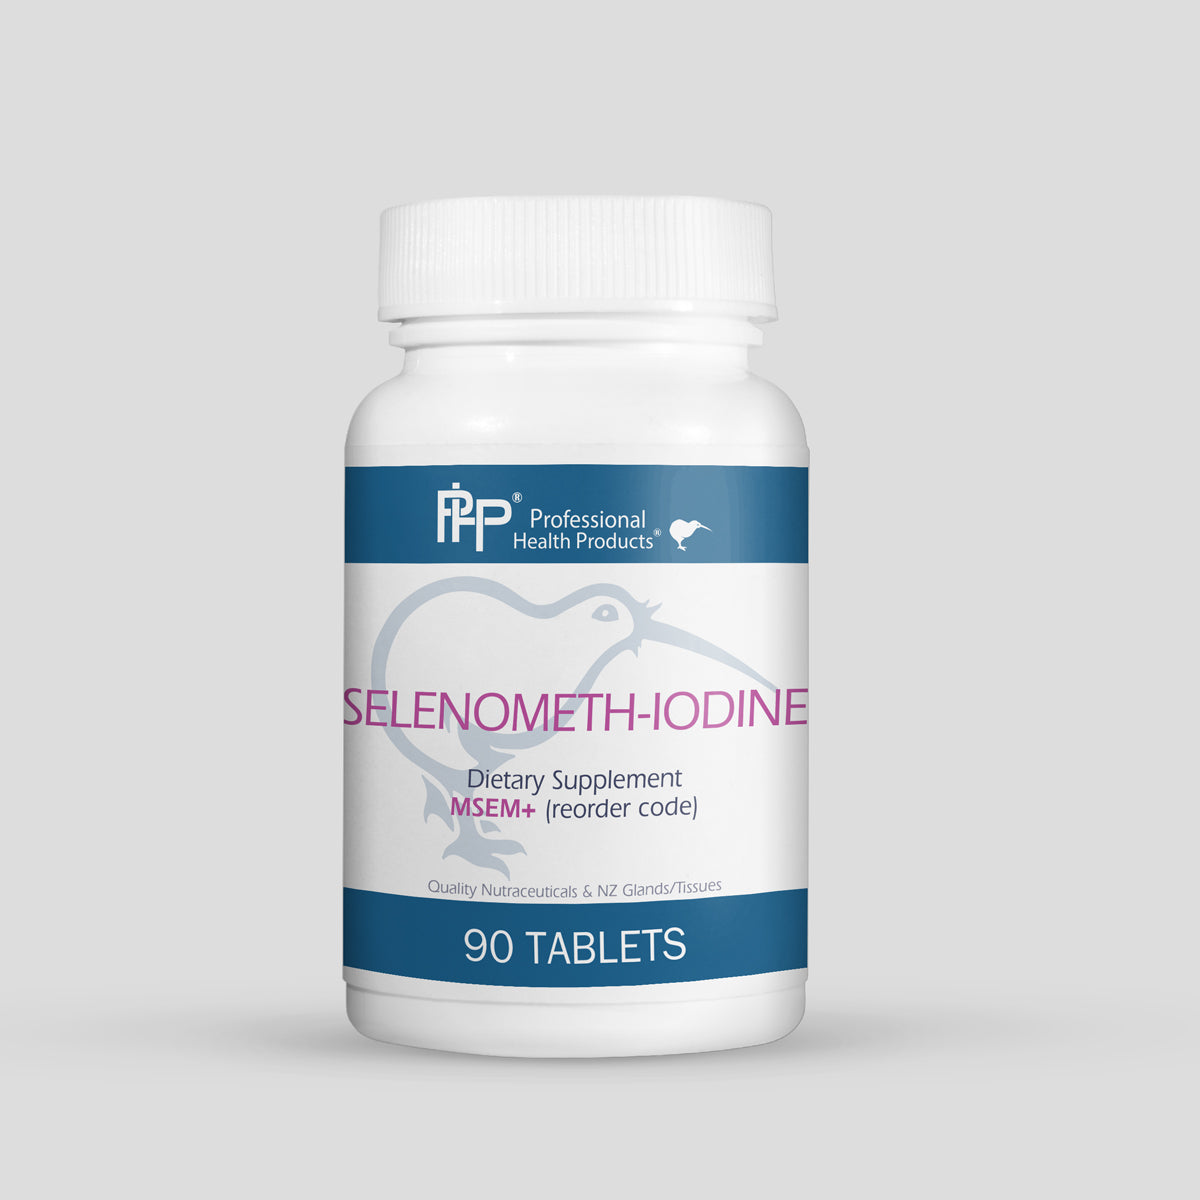 SELENOMETH-IODINE - LaValle Performance Health